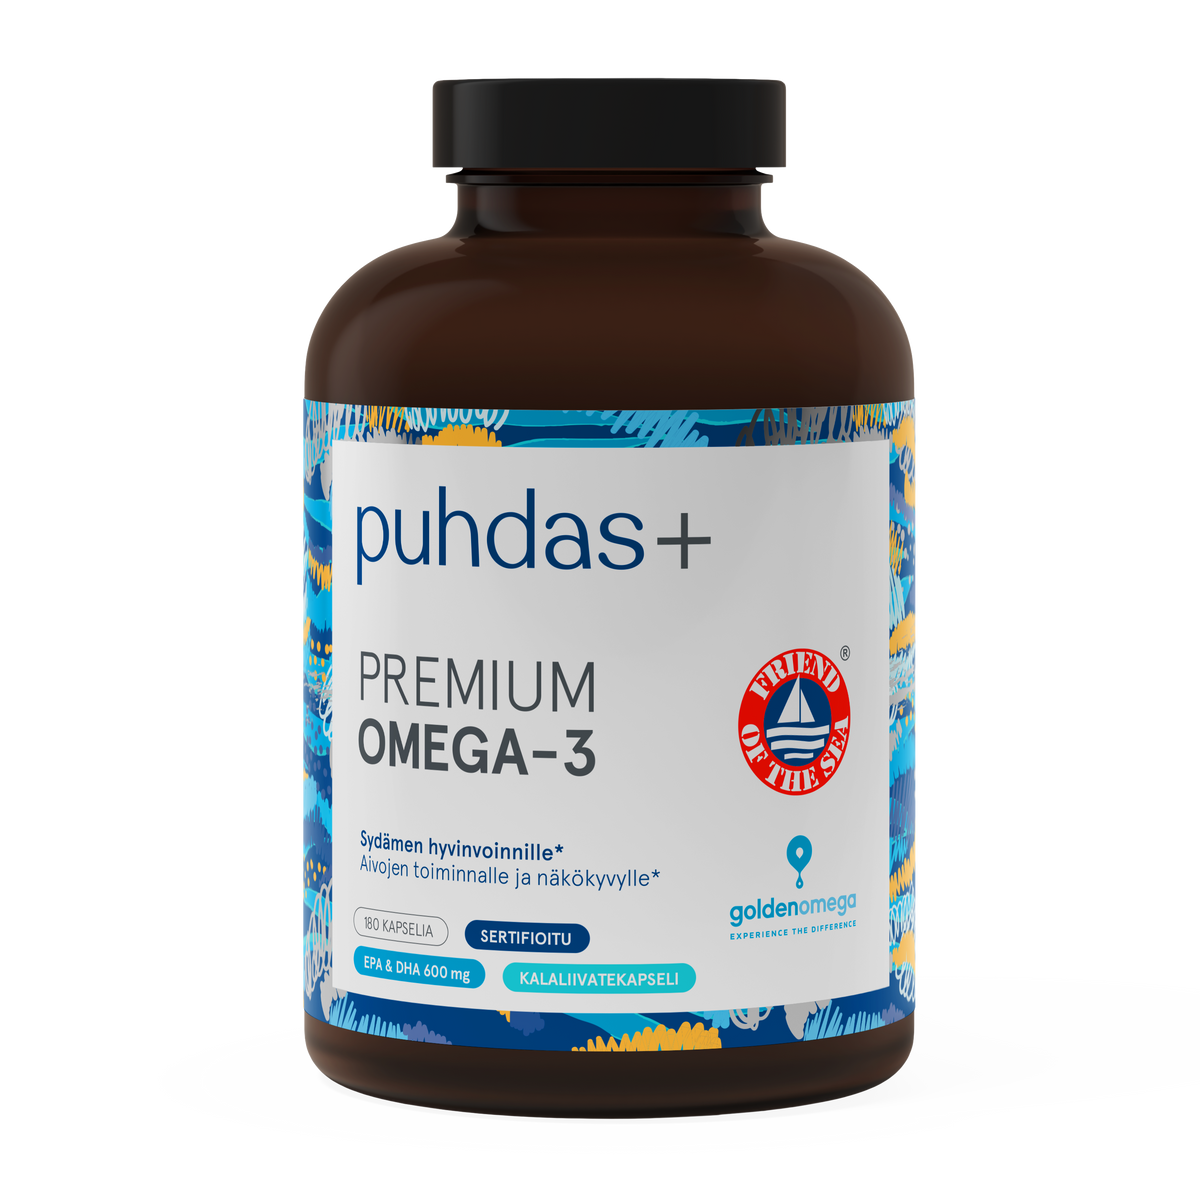 Puhdas+ Premium Omega-3 - Kalaöljykapselit 180 kaps.